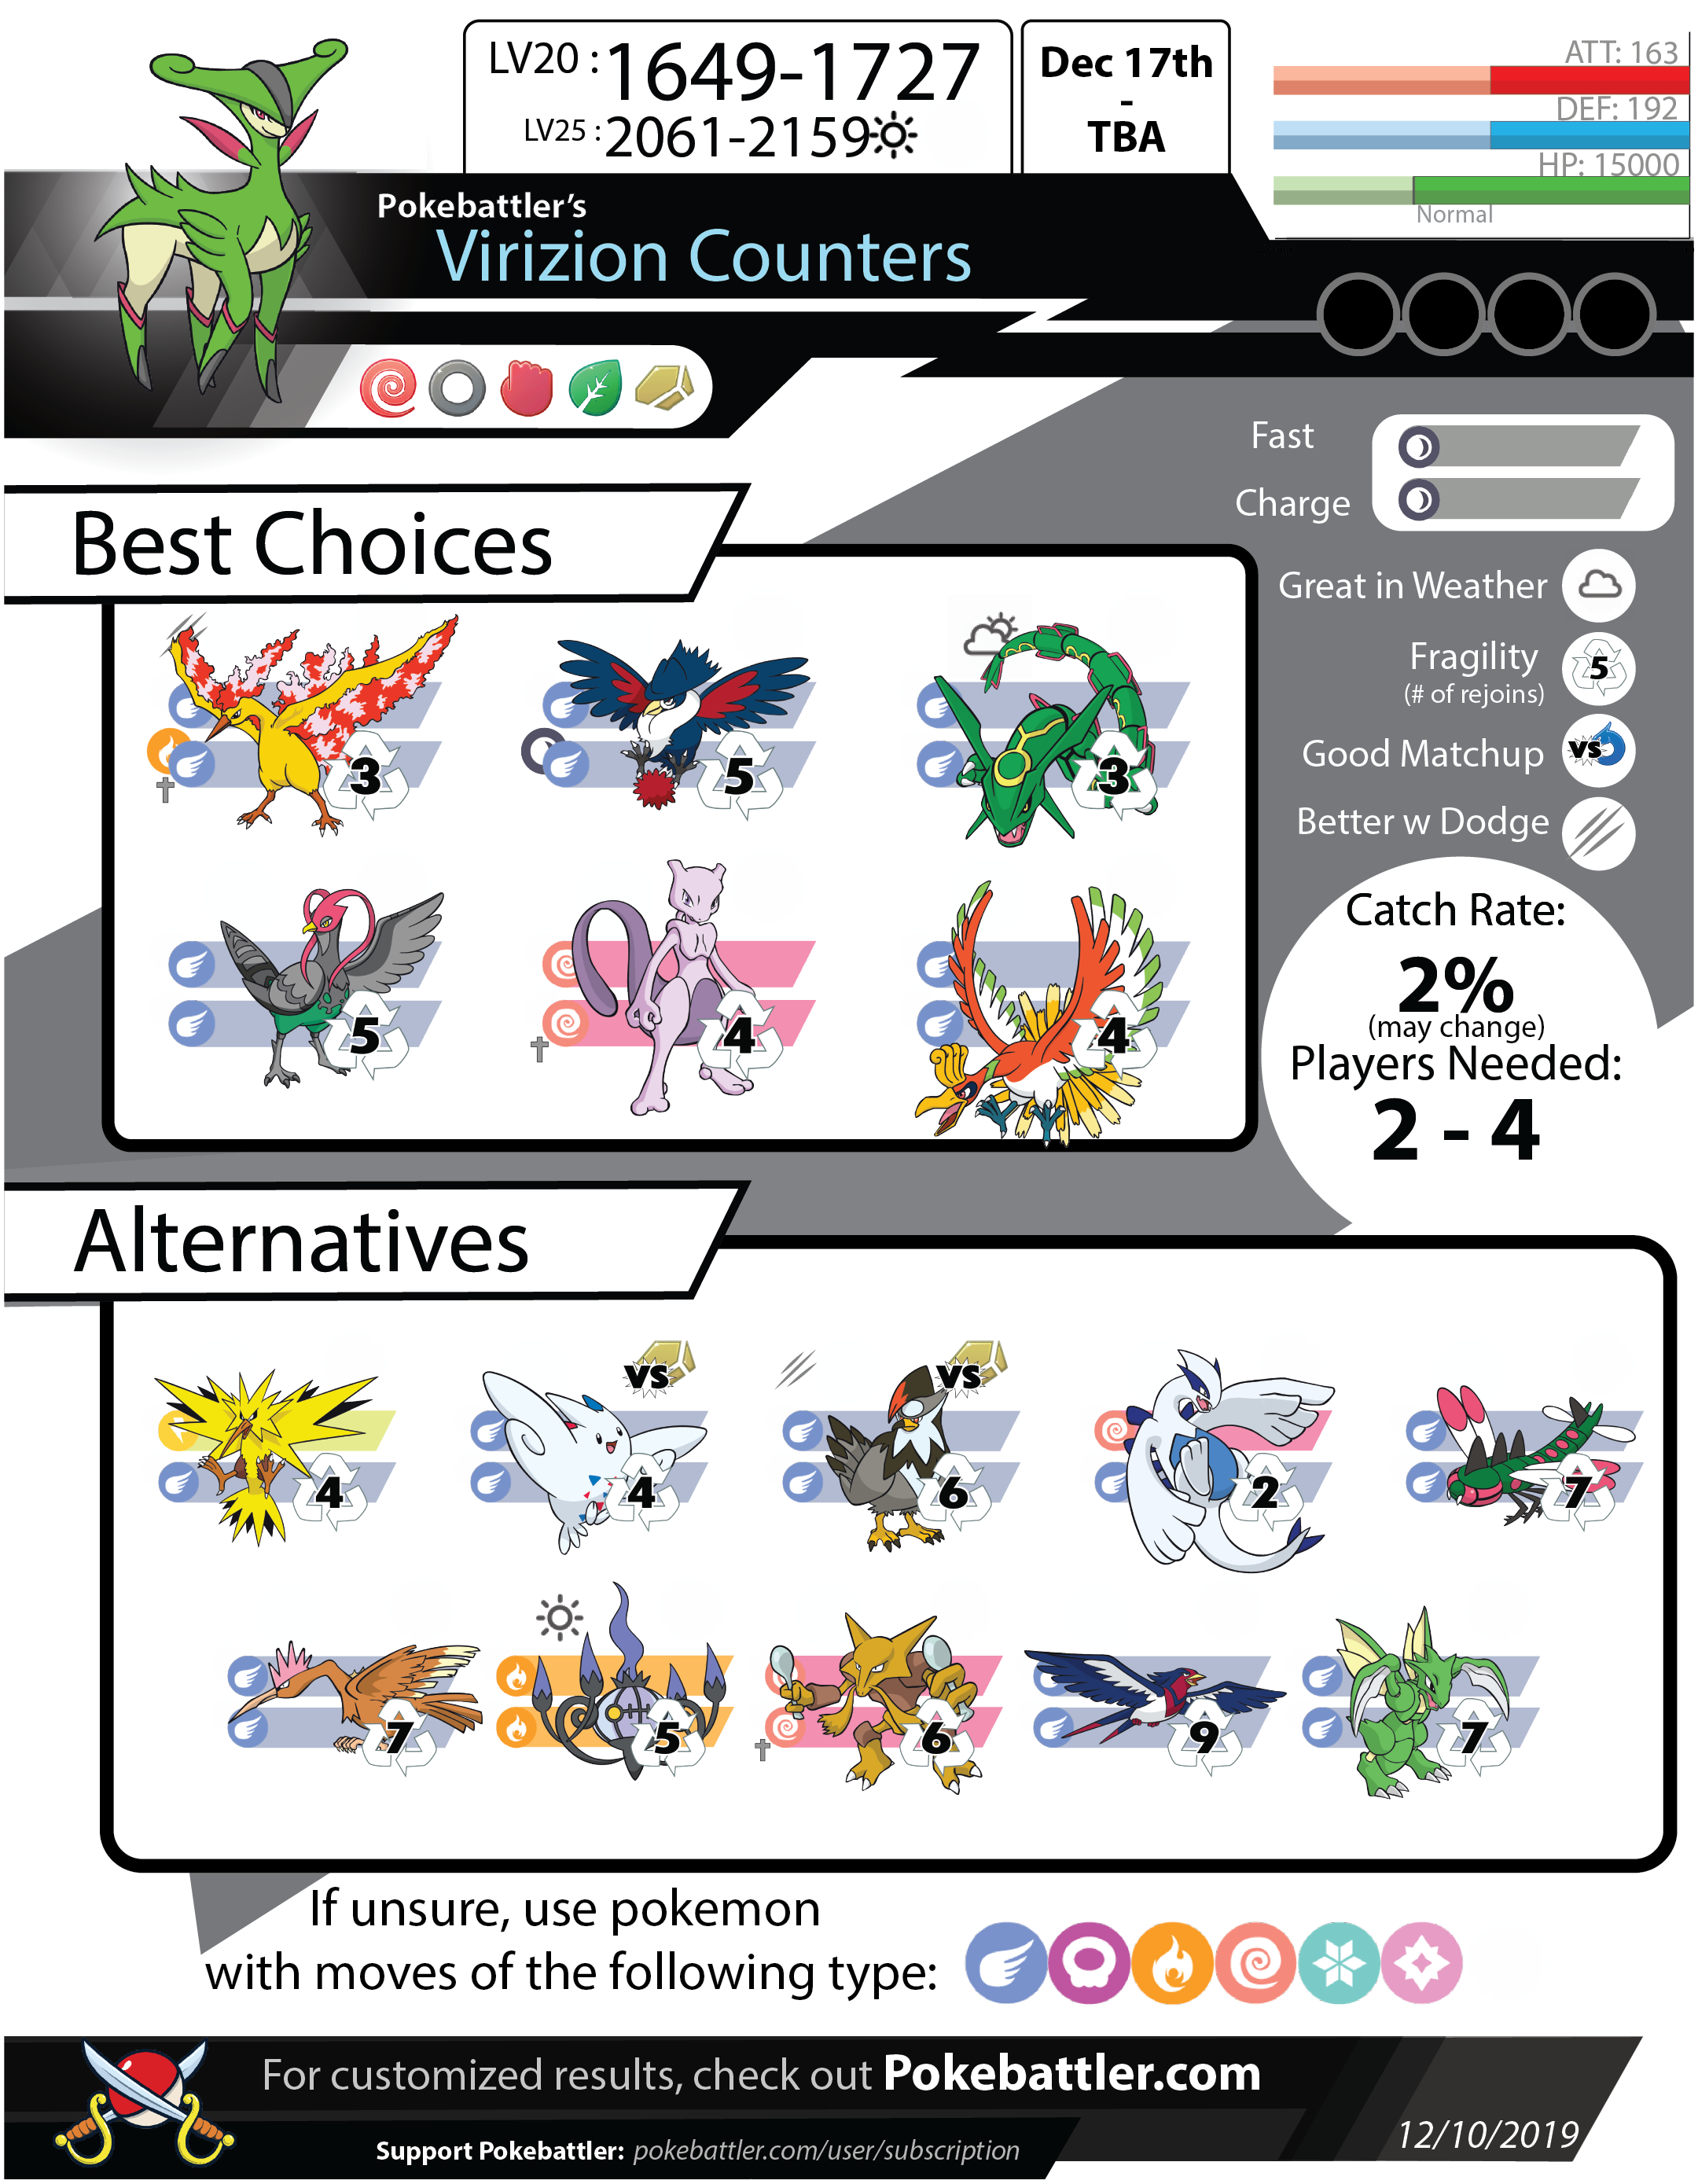 Best Reshiram raid counters in Pokémon Go - Video Games on Sports